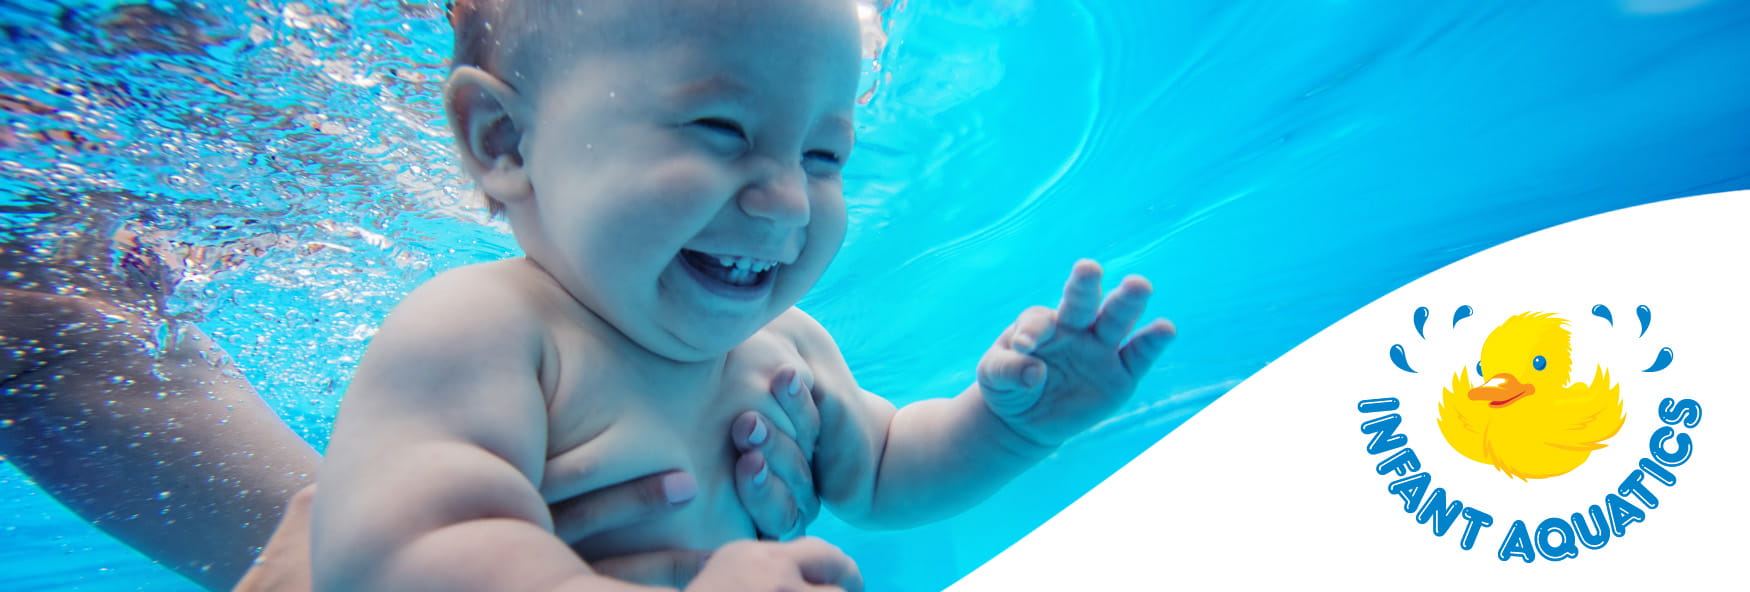 baby smiling underwater